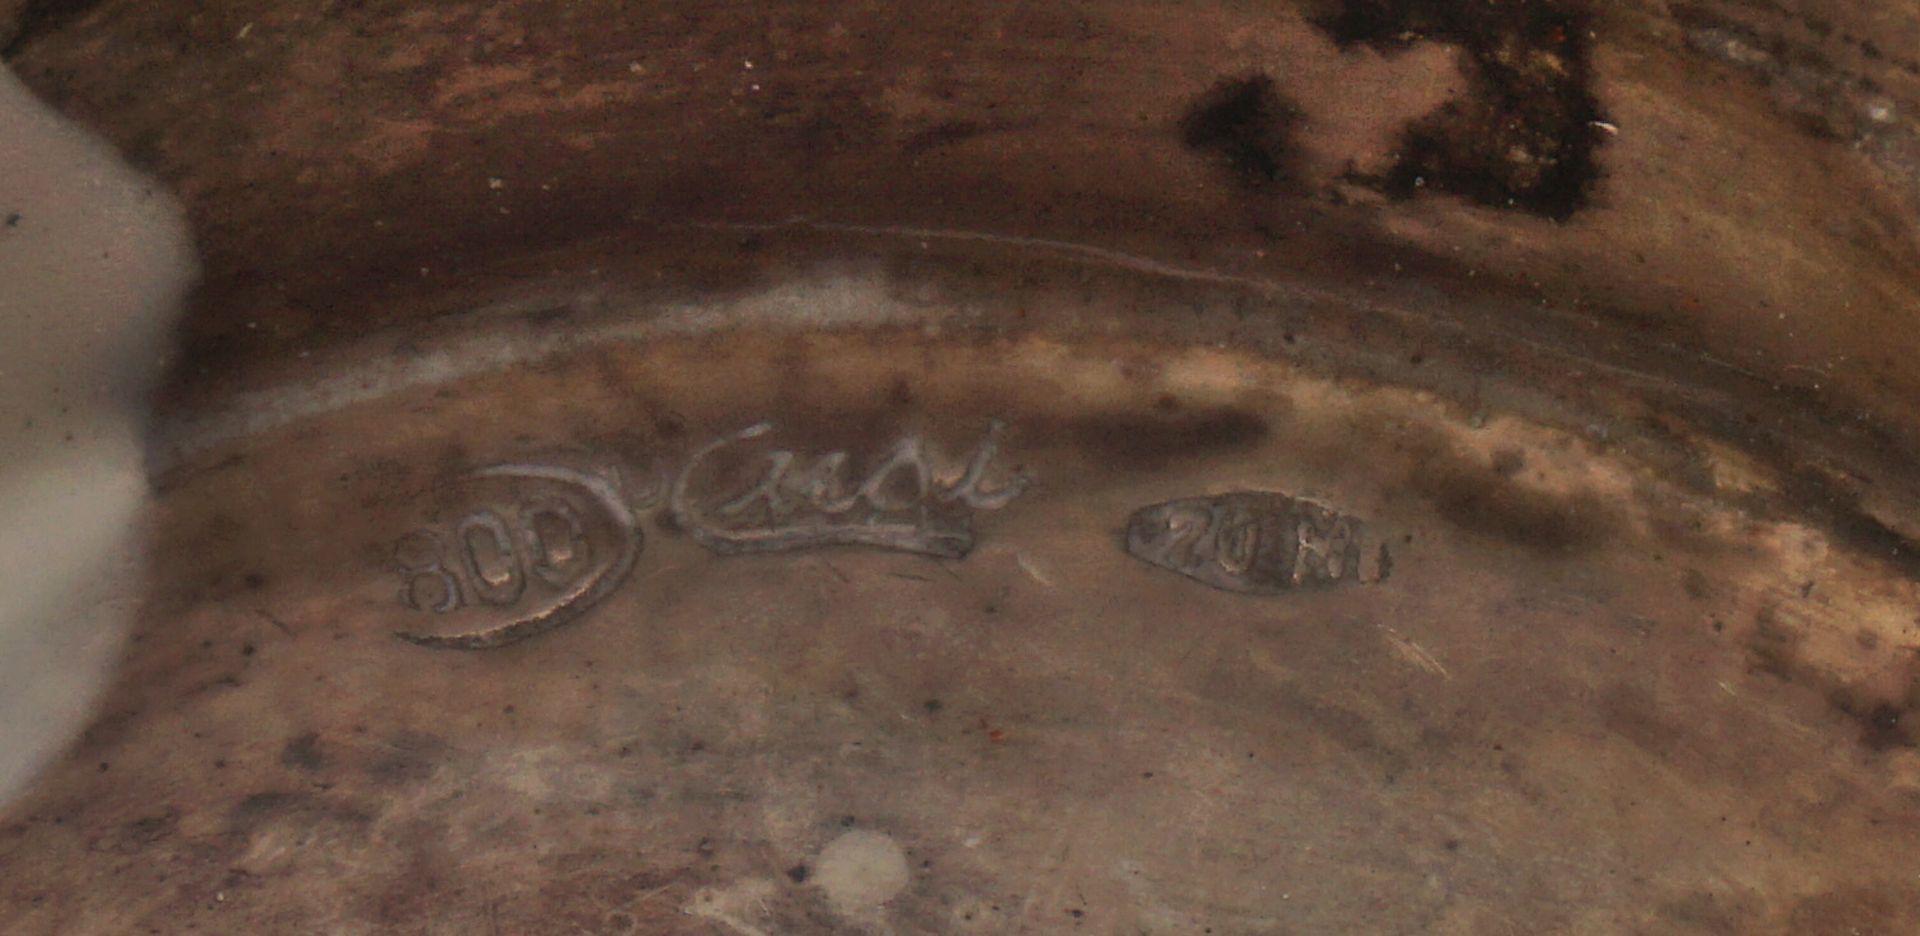 1 Tischfeuerzeug in Pinienzapfenform Silber 800 CUSI GIOIELLIERI DI RINALDO CUSI & FIGLI - Bild 3 aus 3